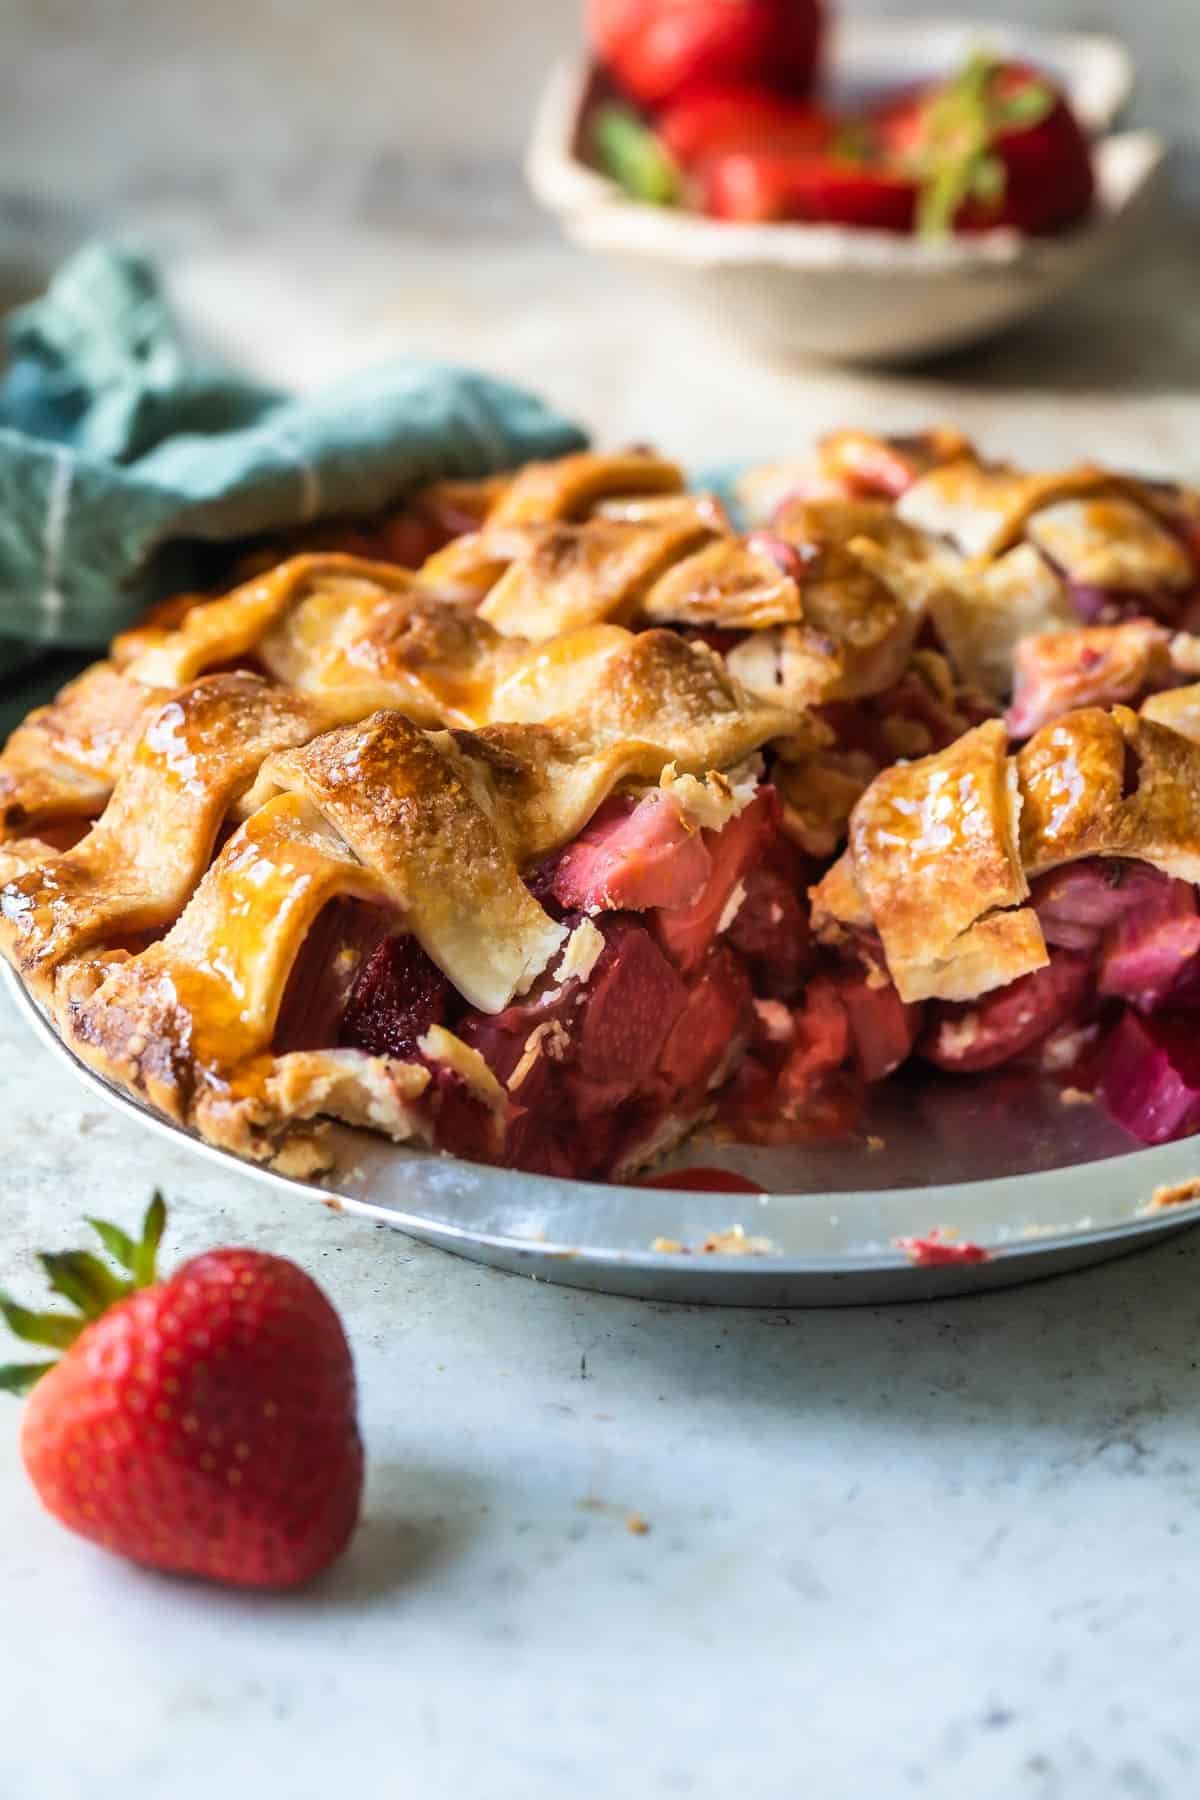 Strawberry rhubarb pie in a silver pie pan.